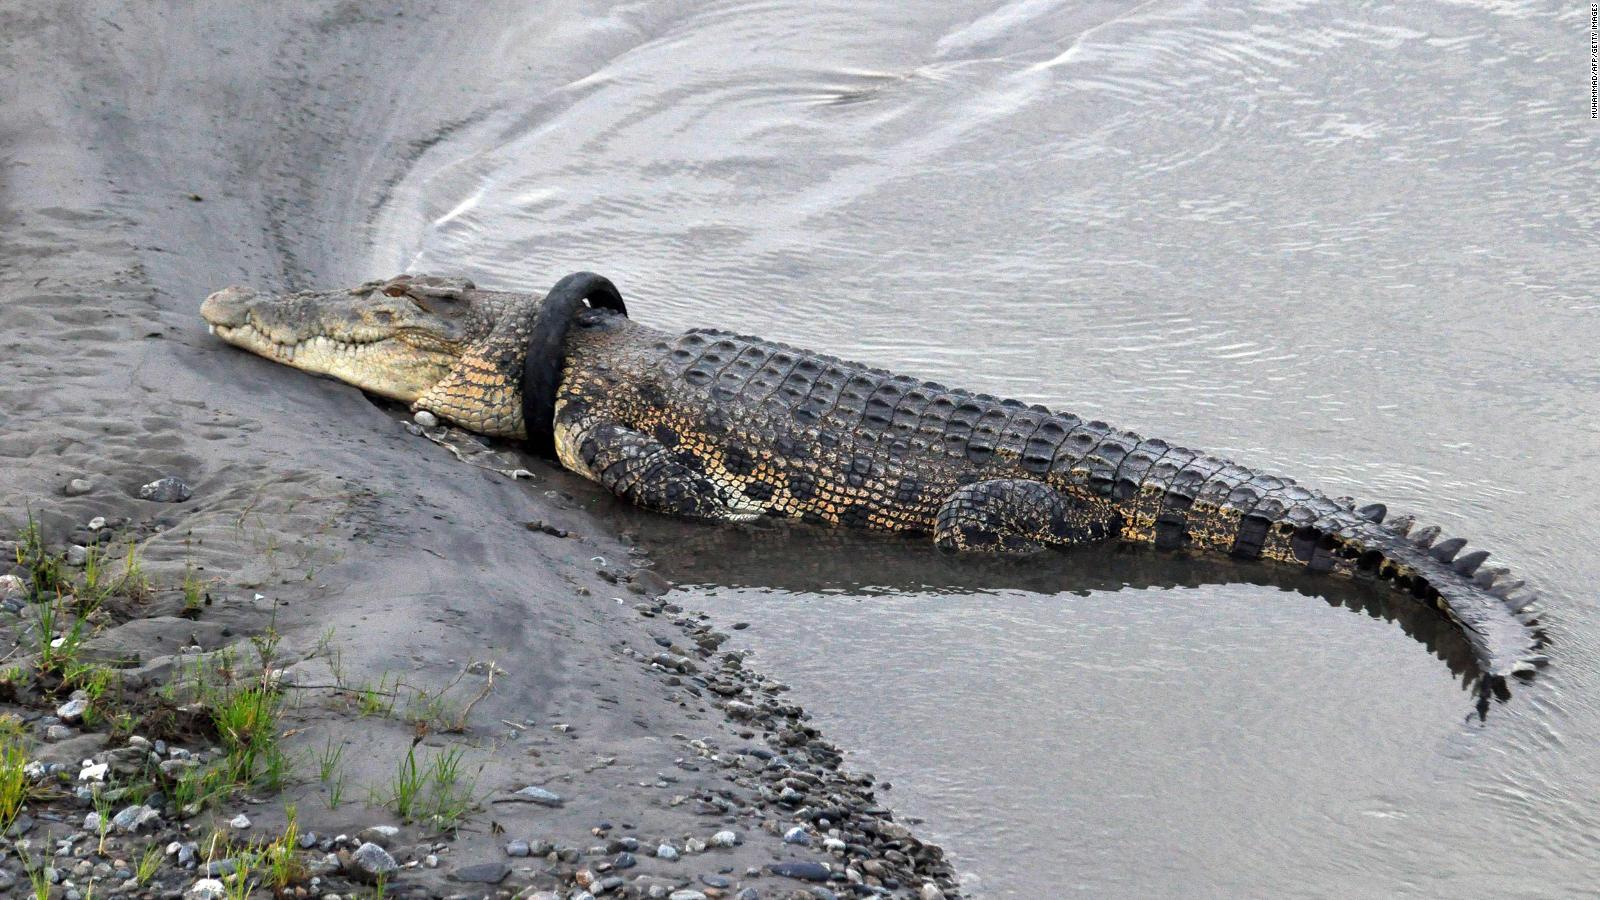 Palu River crocodile: Remove the tire and you can win - CNN